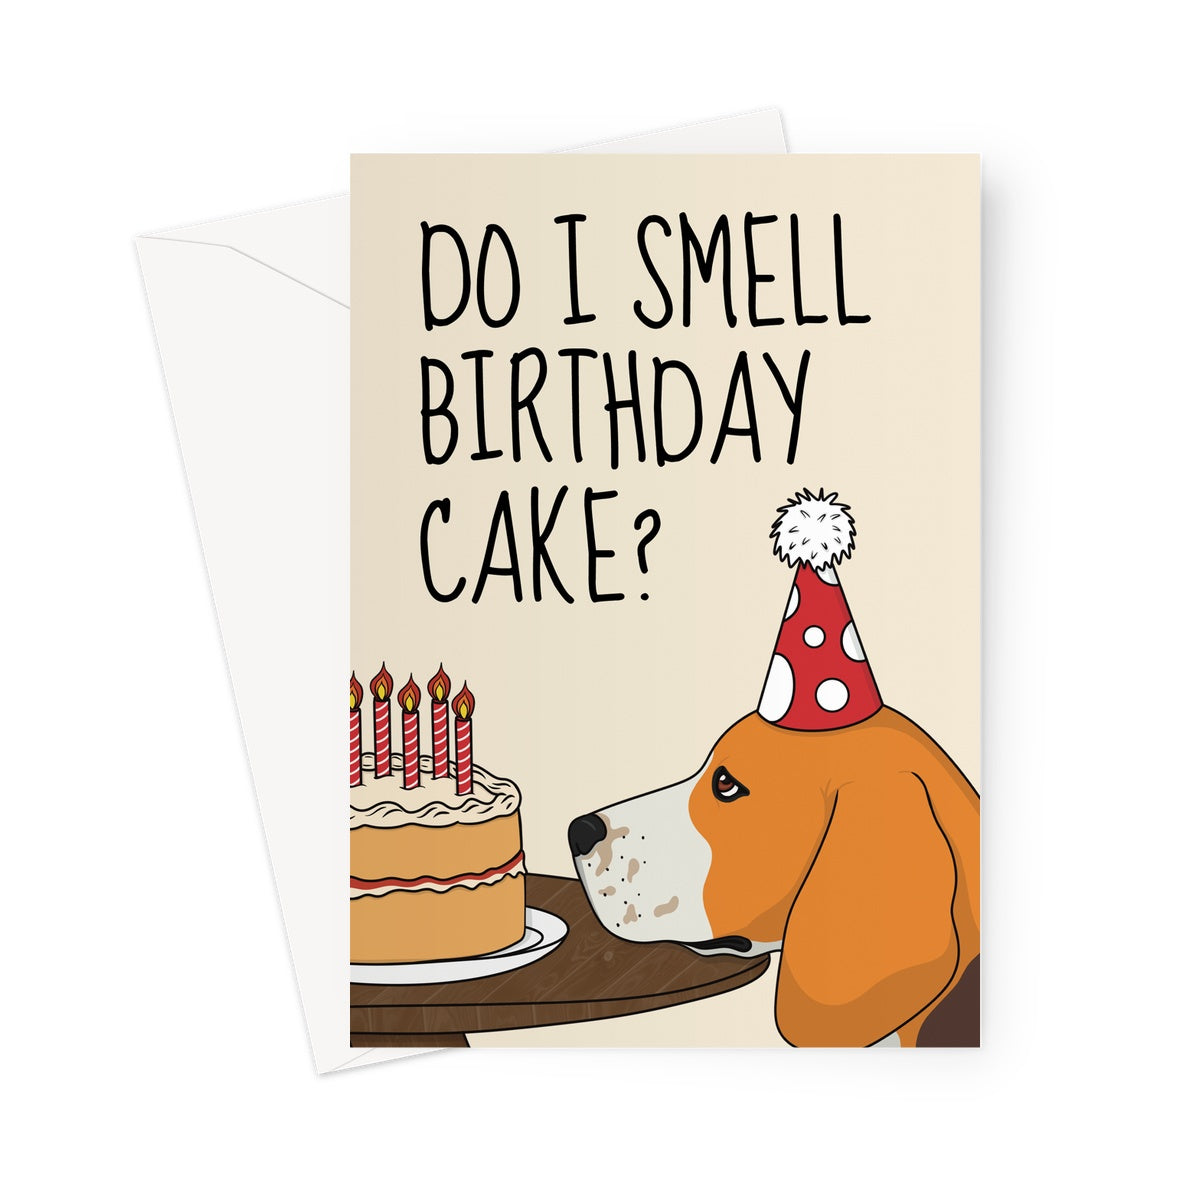 Cute beagle dog birthday card, do I smell birthday cake?